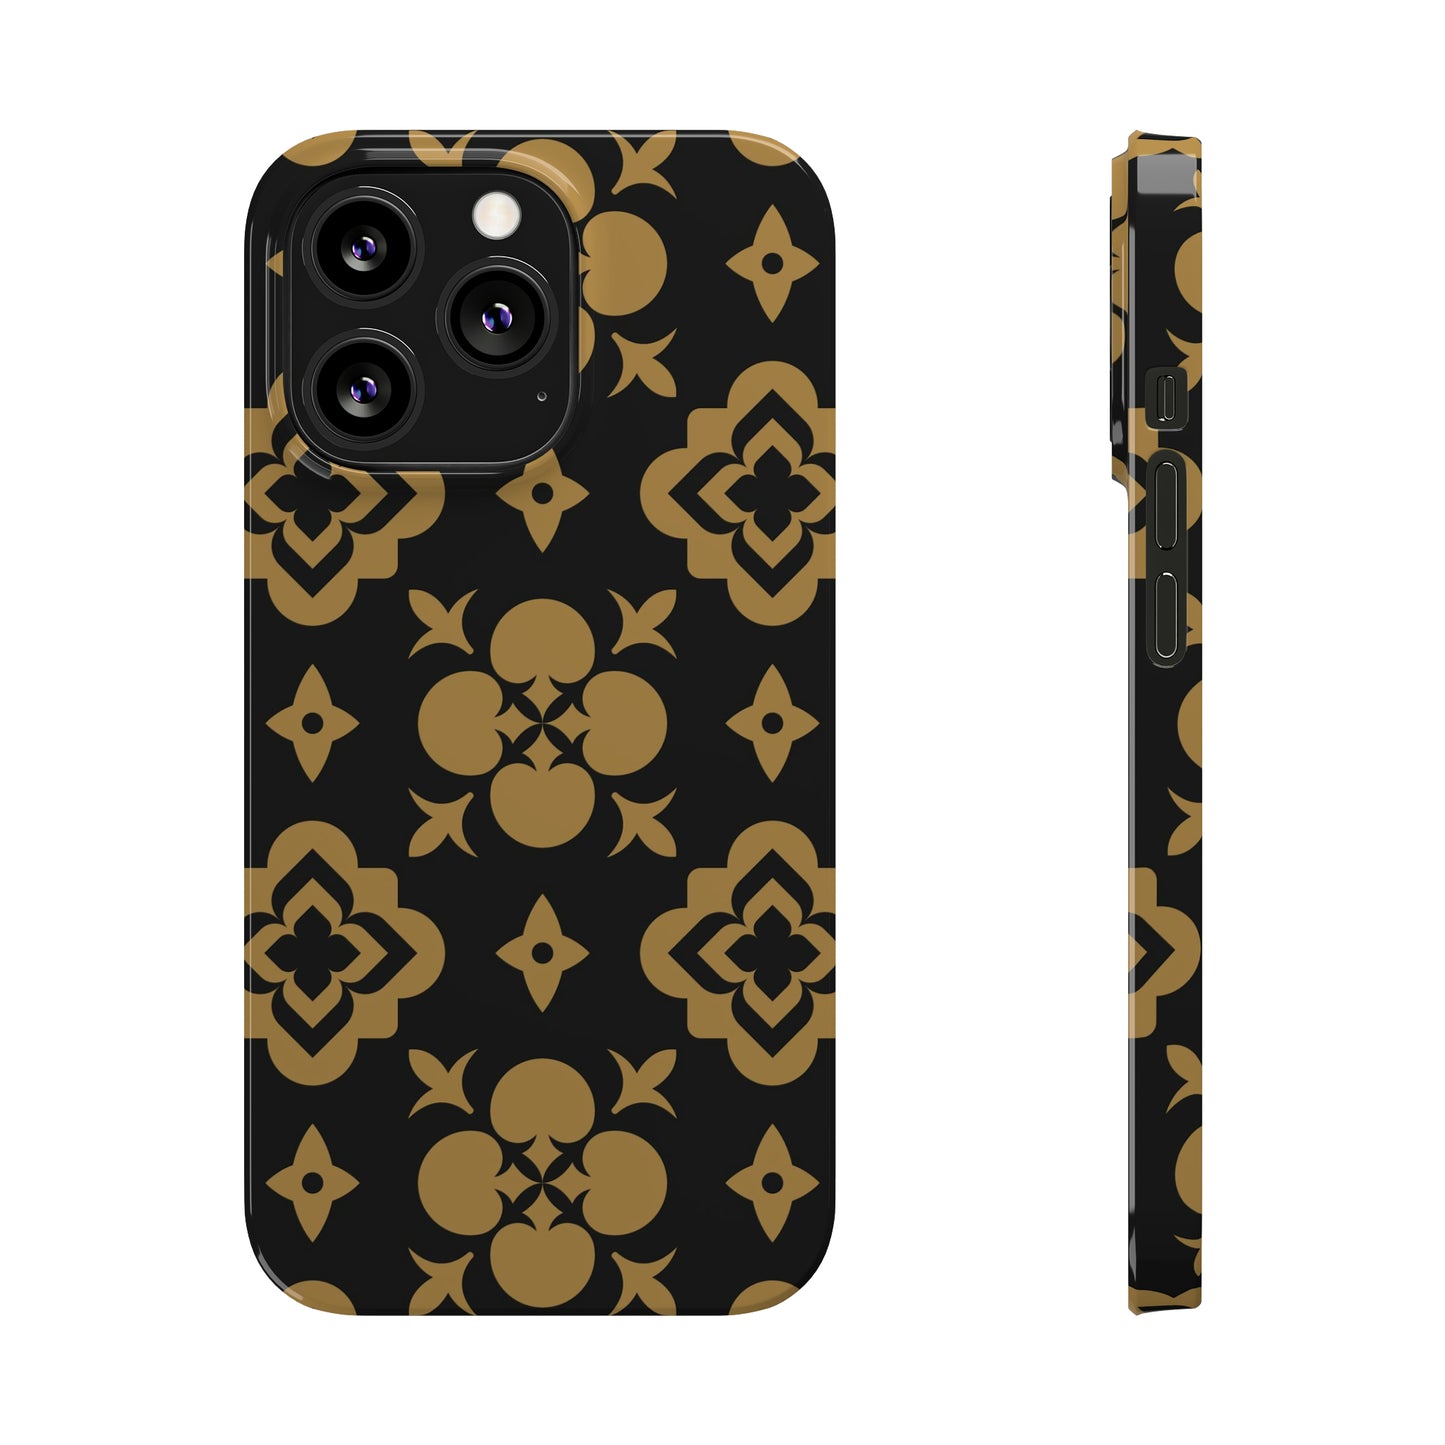 Geometric luxury iPhone case